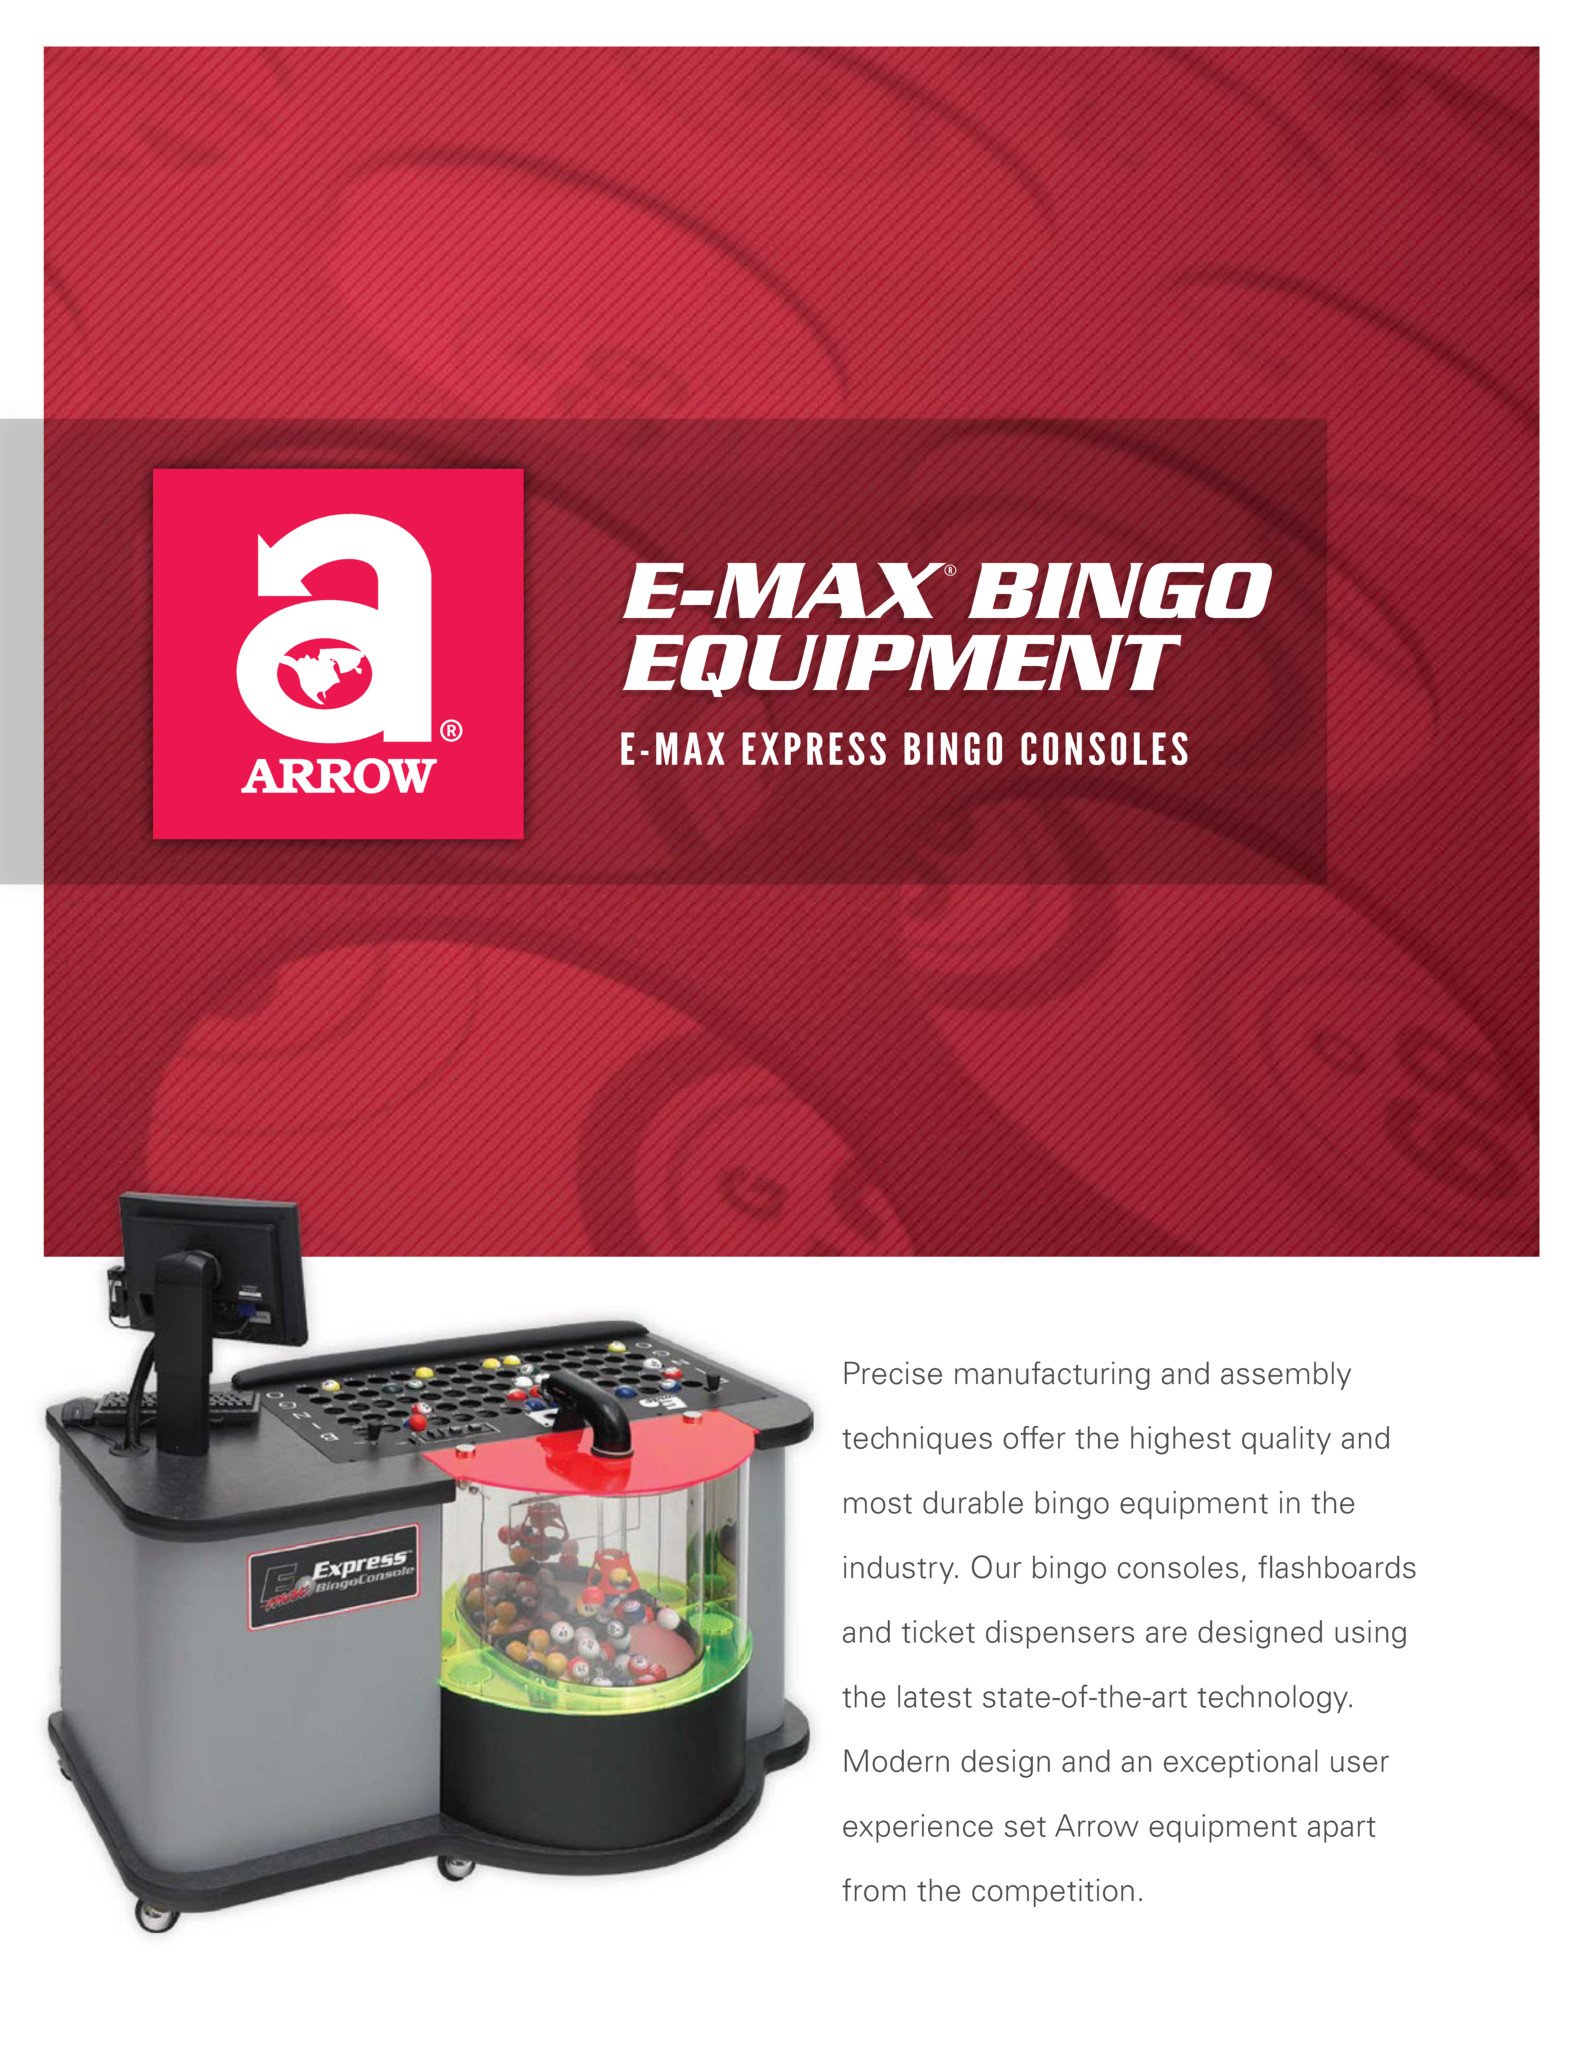 E-max Express Bingo Console Flyer Promotional Materials/Equipment Flyers & Brochures